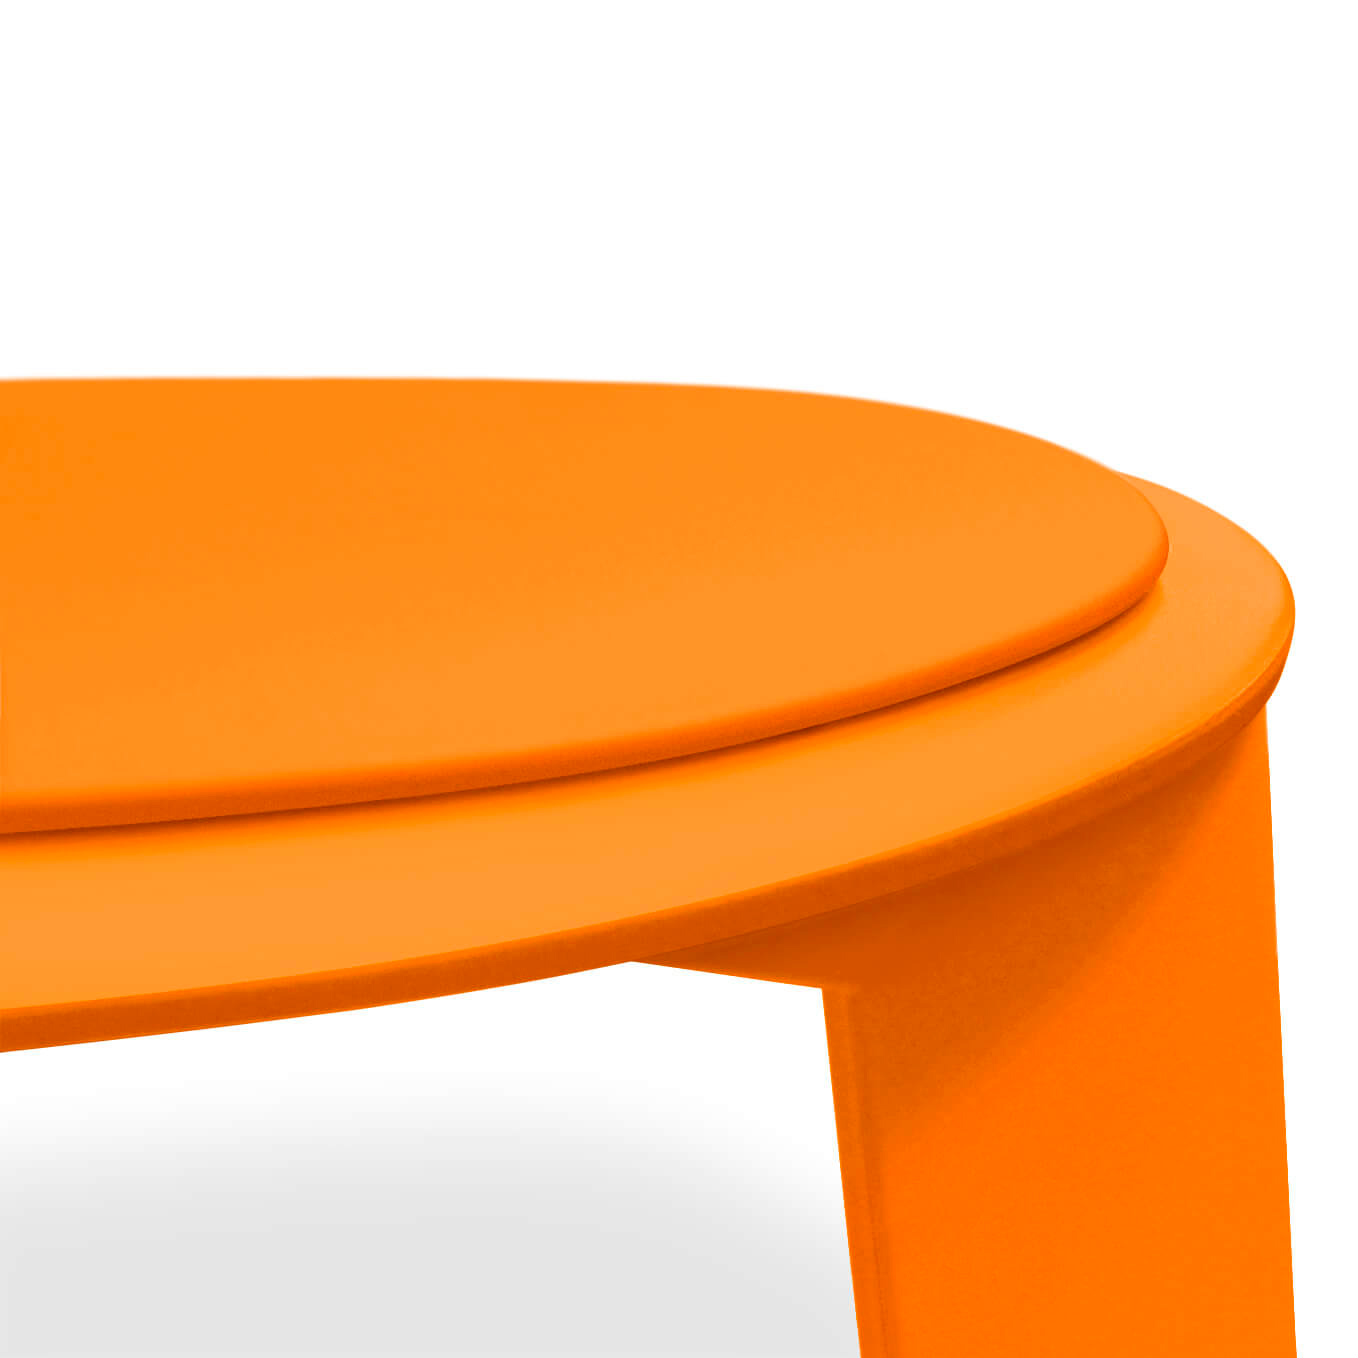 ярко оранжевый стул у ребенка